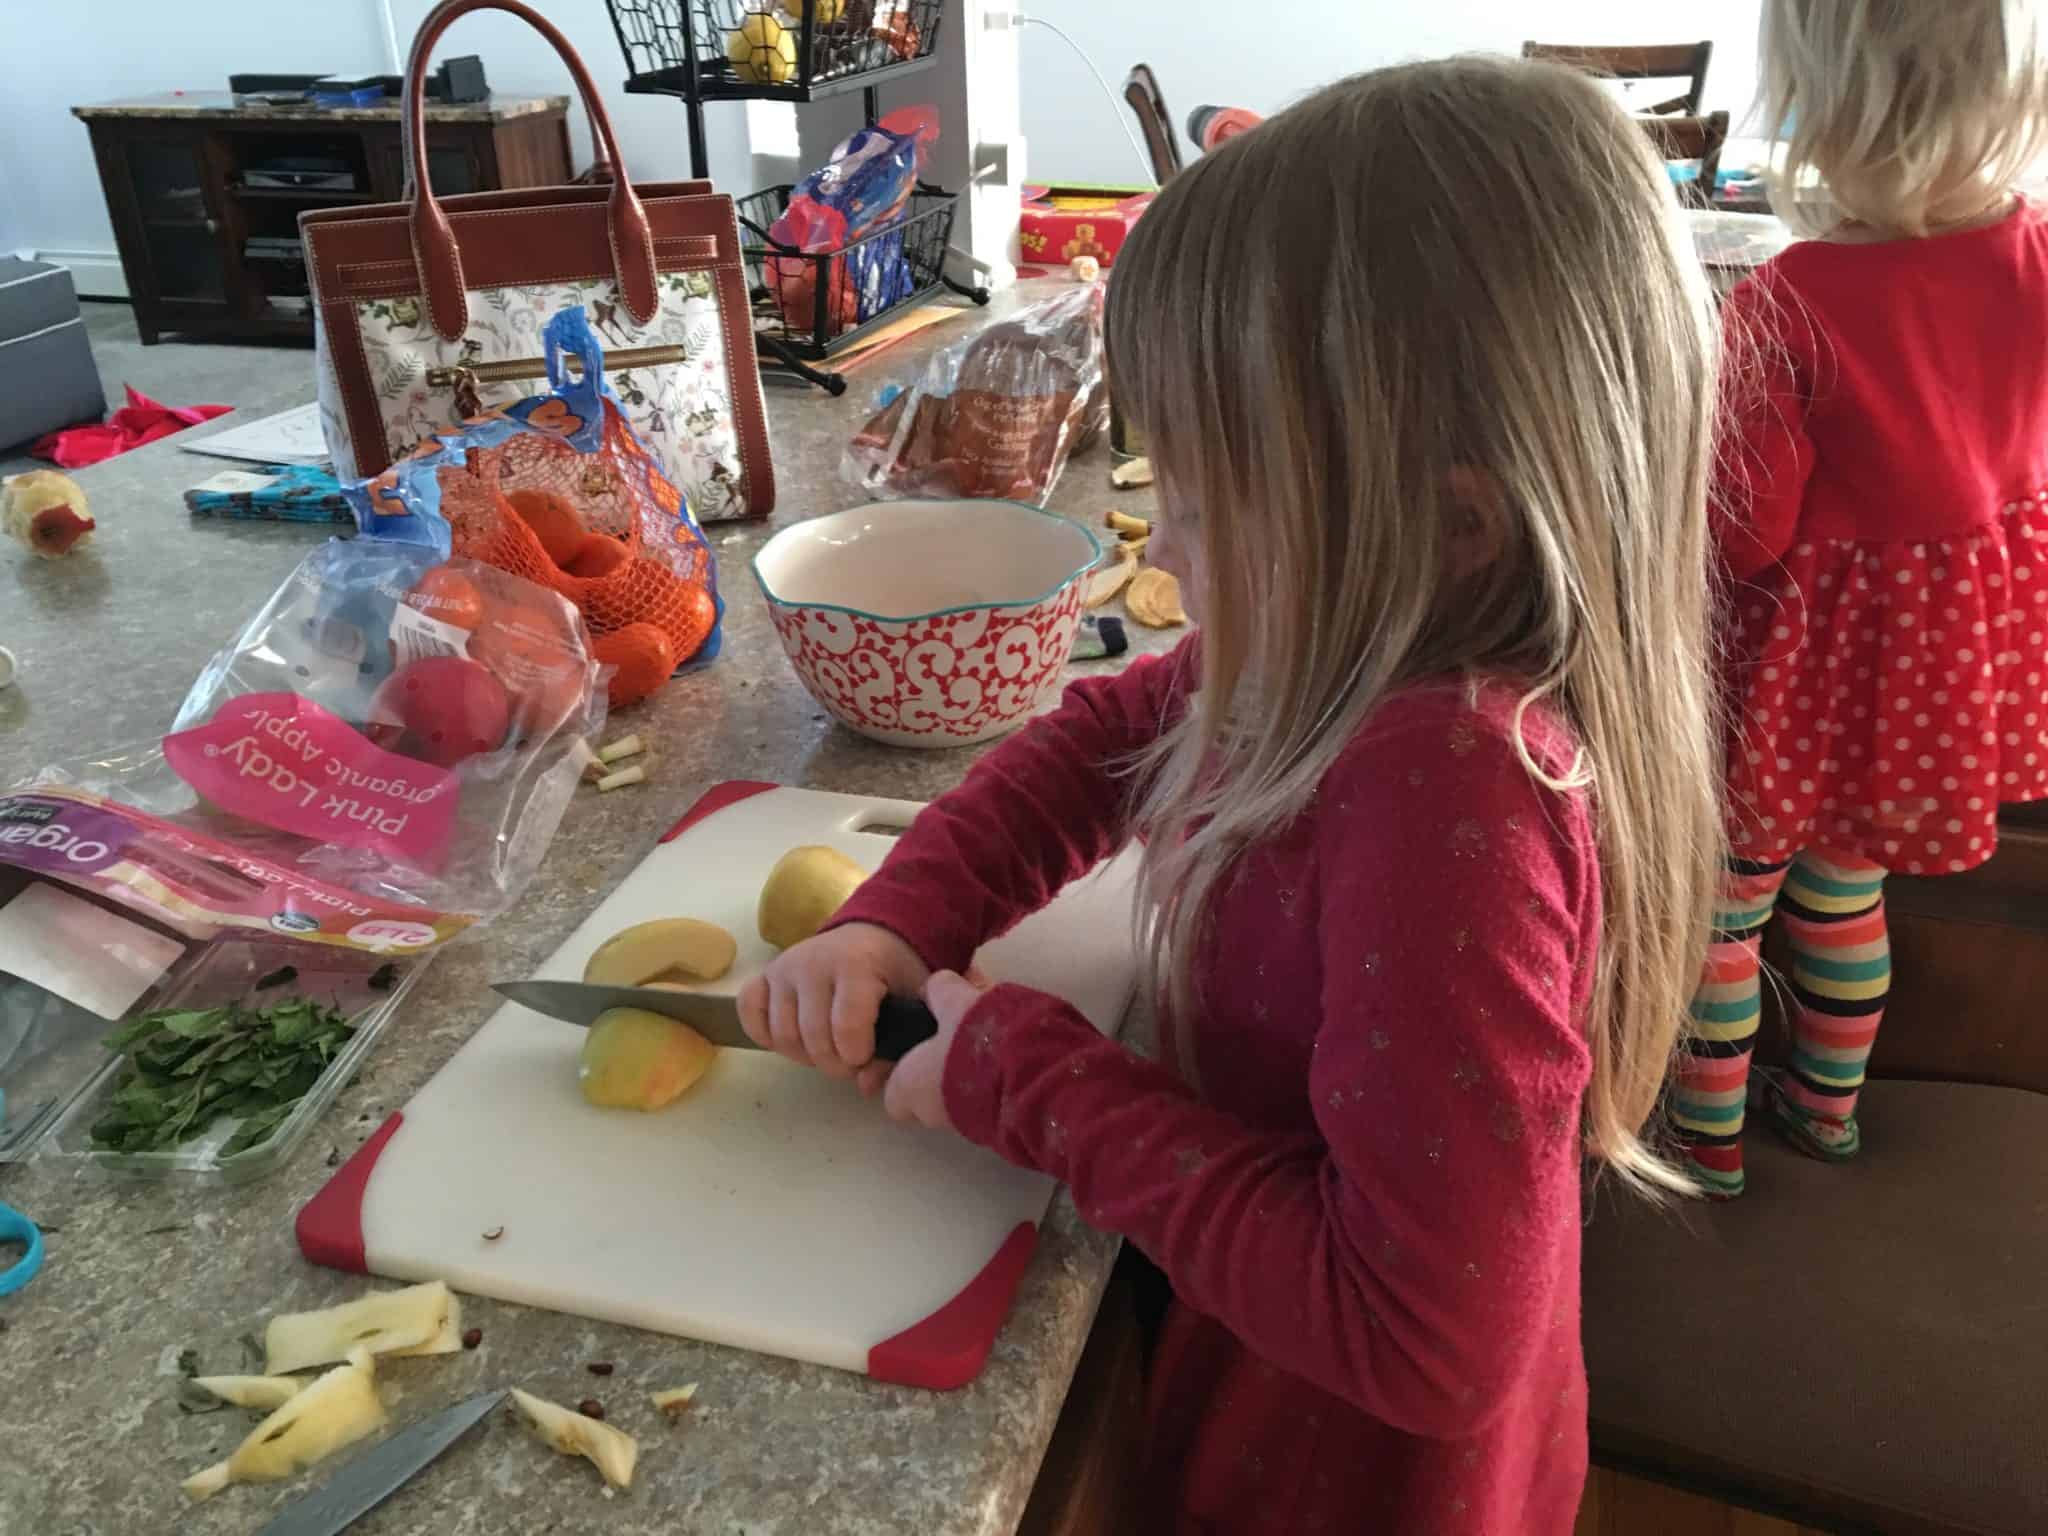 Kids using knife in kitchen